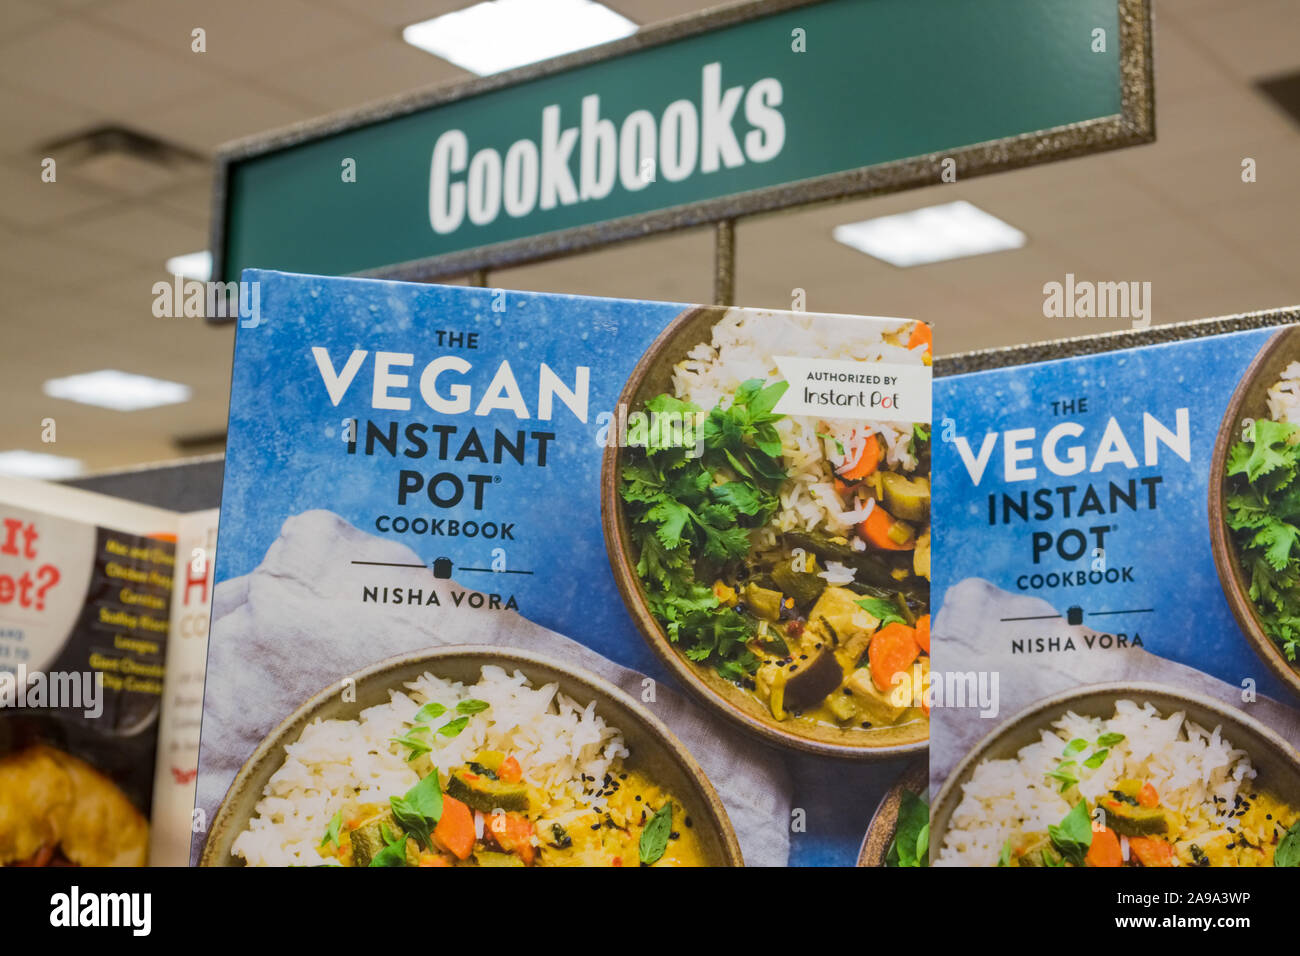 MINNEAPOLIS, USA, - AUGUST, 8, 2019: Vegan cookbooks on display in a bookshop in Minneapolis, USA. Stock Photo